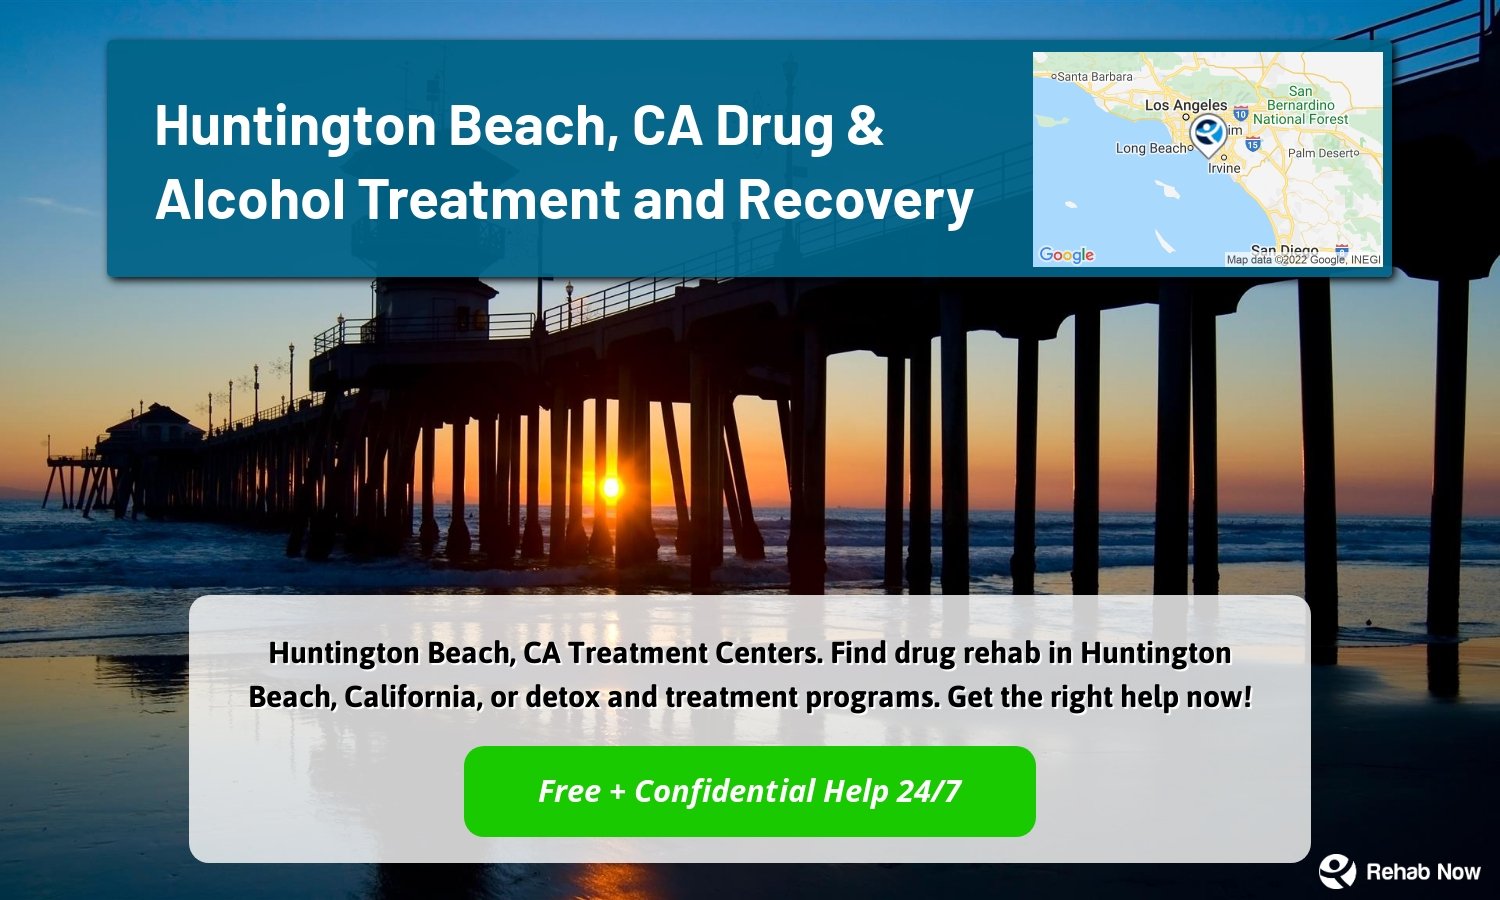 Huntington Beach, CA Treatment Centers. Find drug rehab in Huntington Beach, California, or detox and treatment programs. Get the right help now!